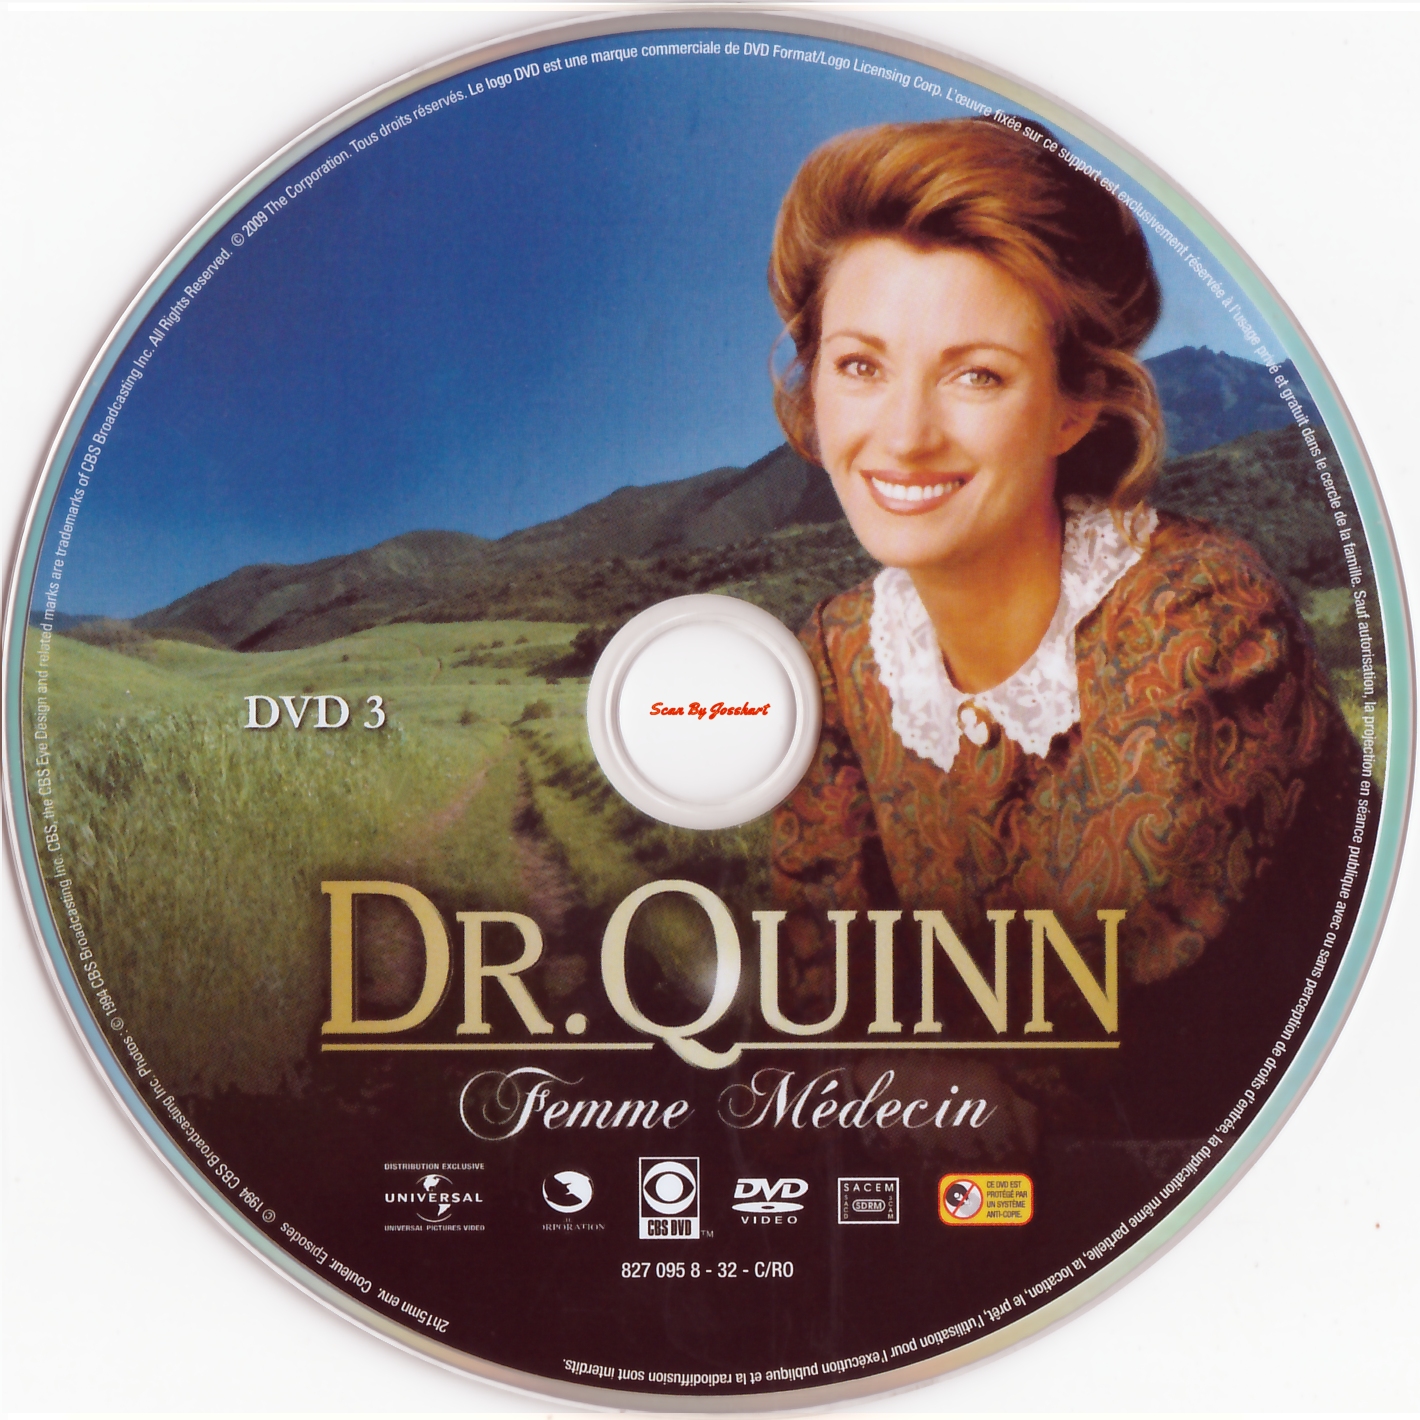 Docteur Quinn femme mdecin - Integrale Saison 3 DISC 3